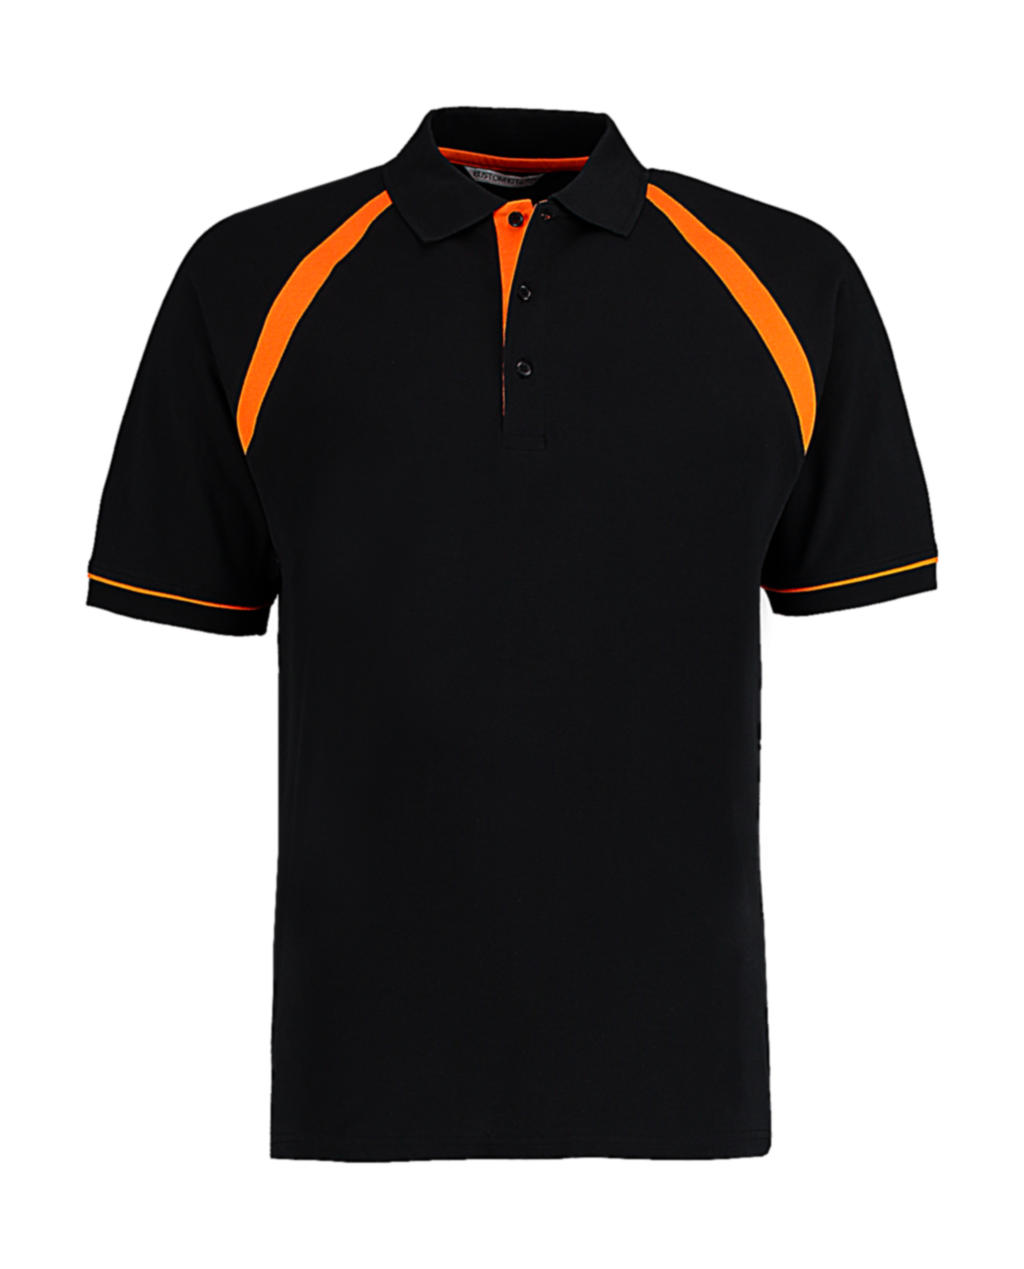 custom_base_color_black-orange